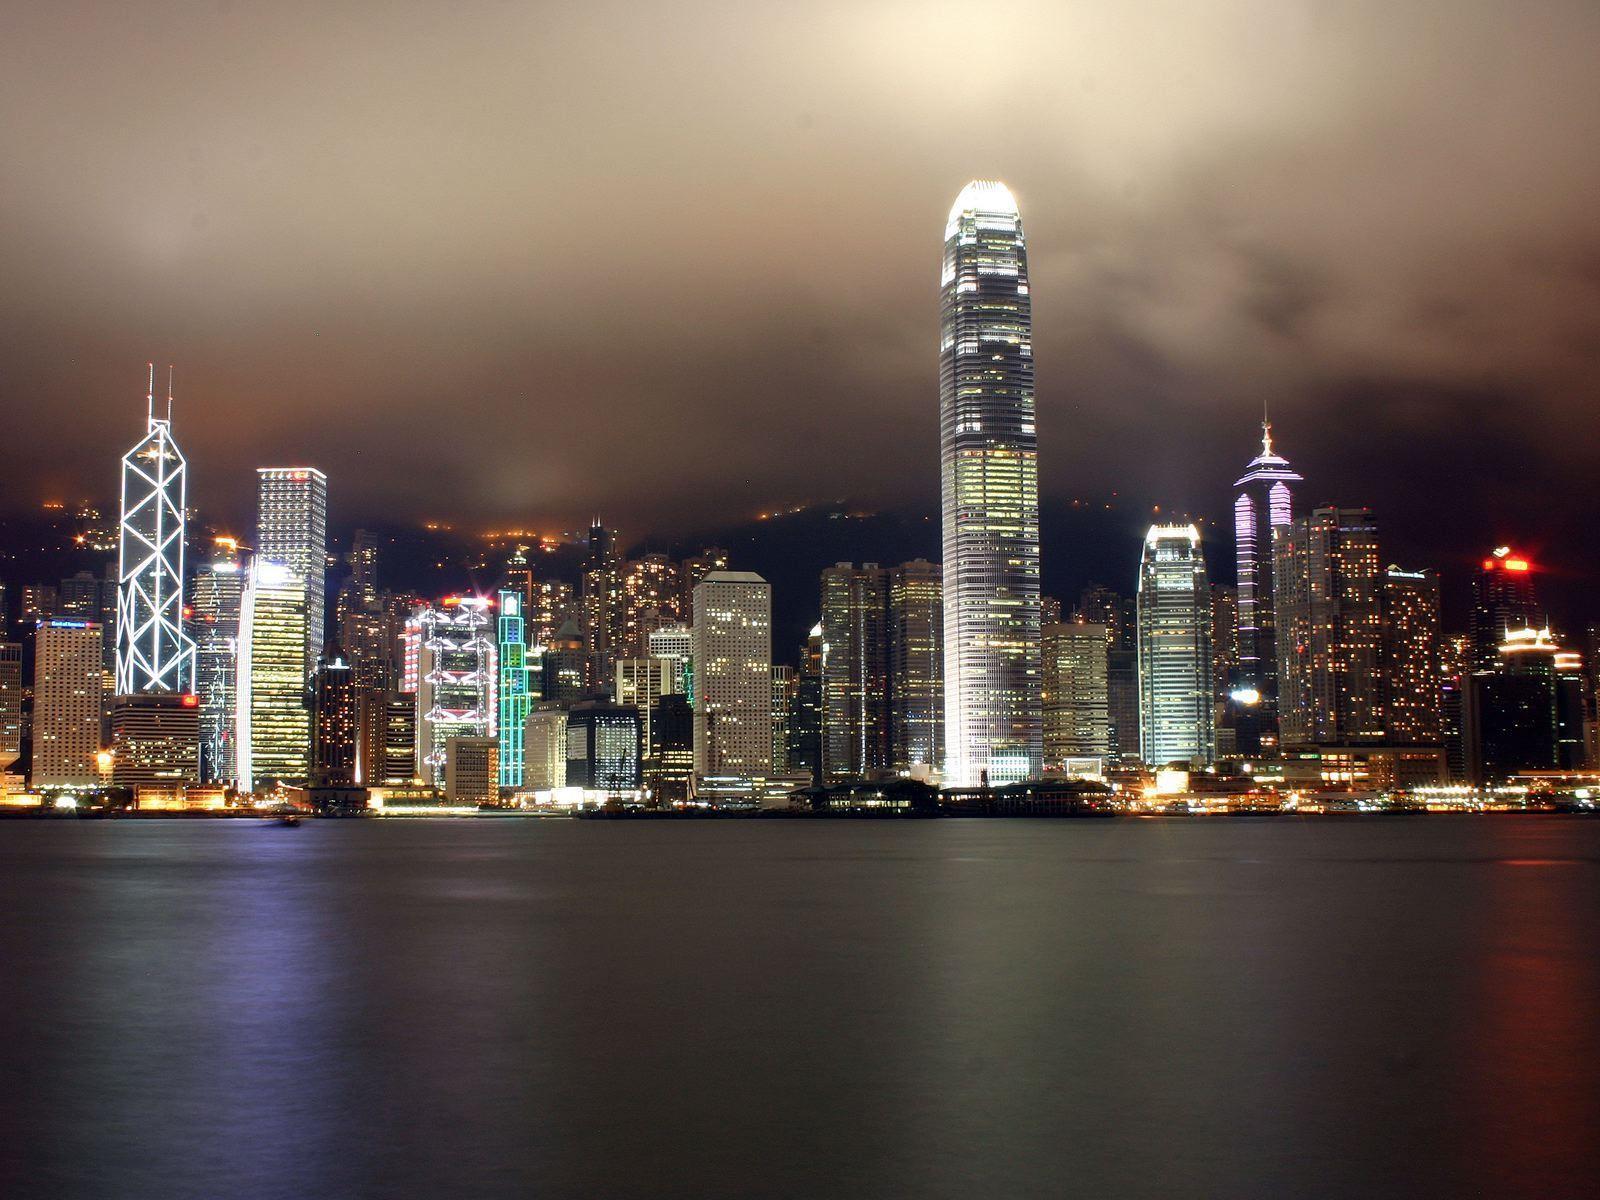 Hong Kong HD Wallpaper for desktop download